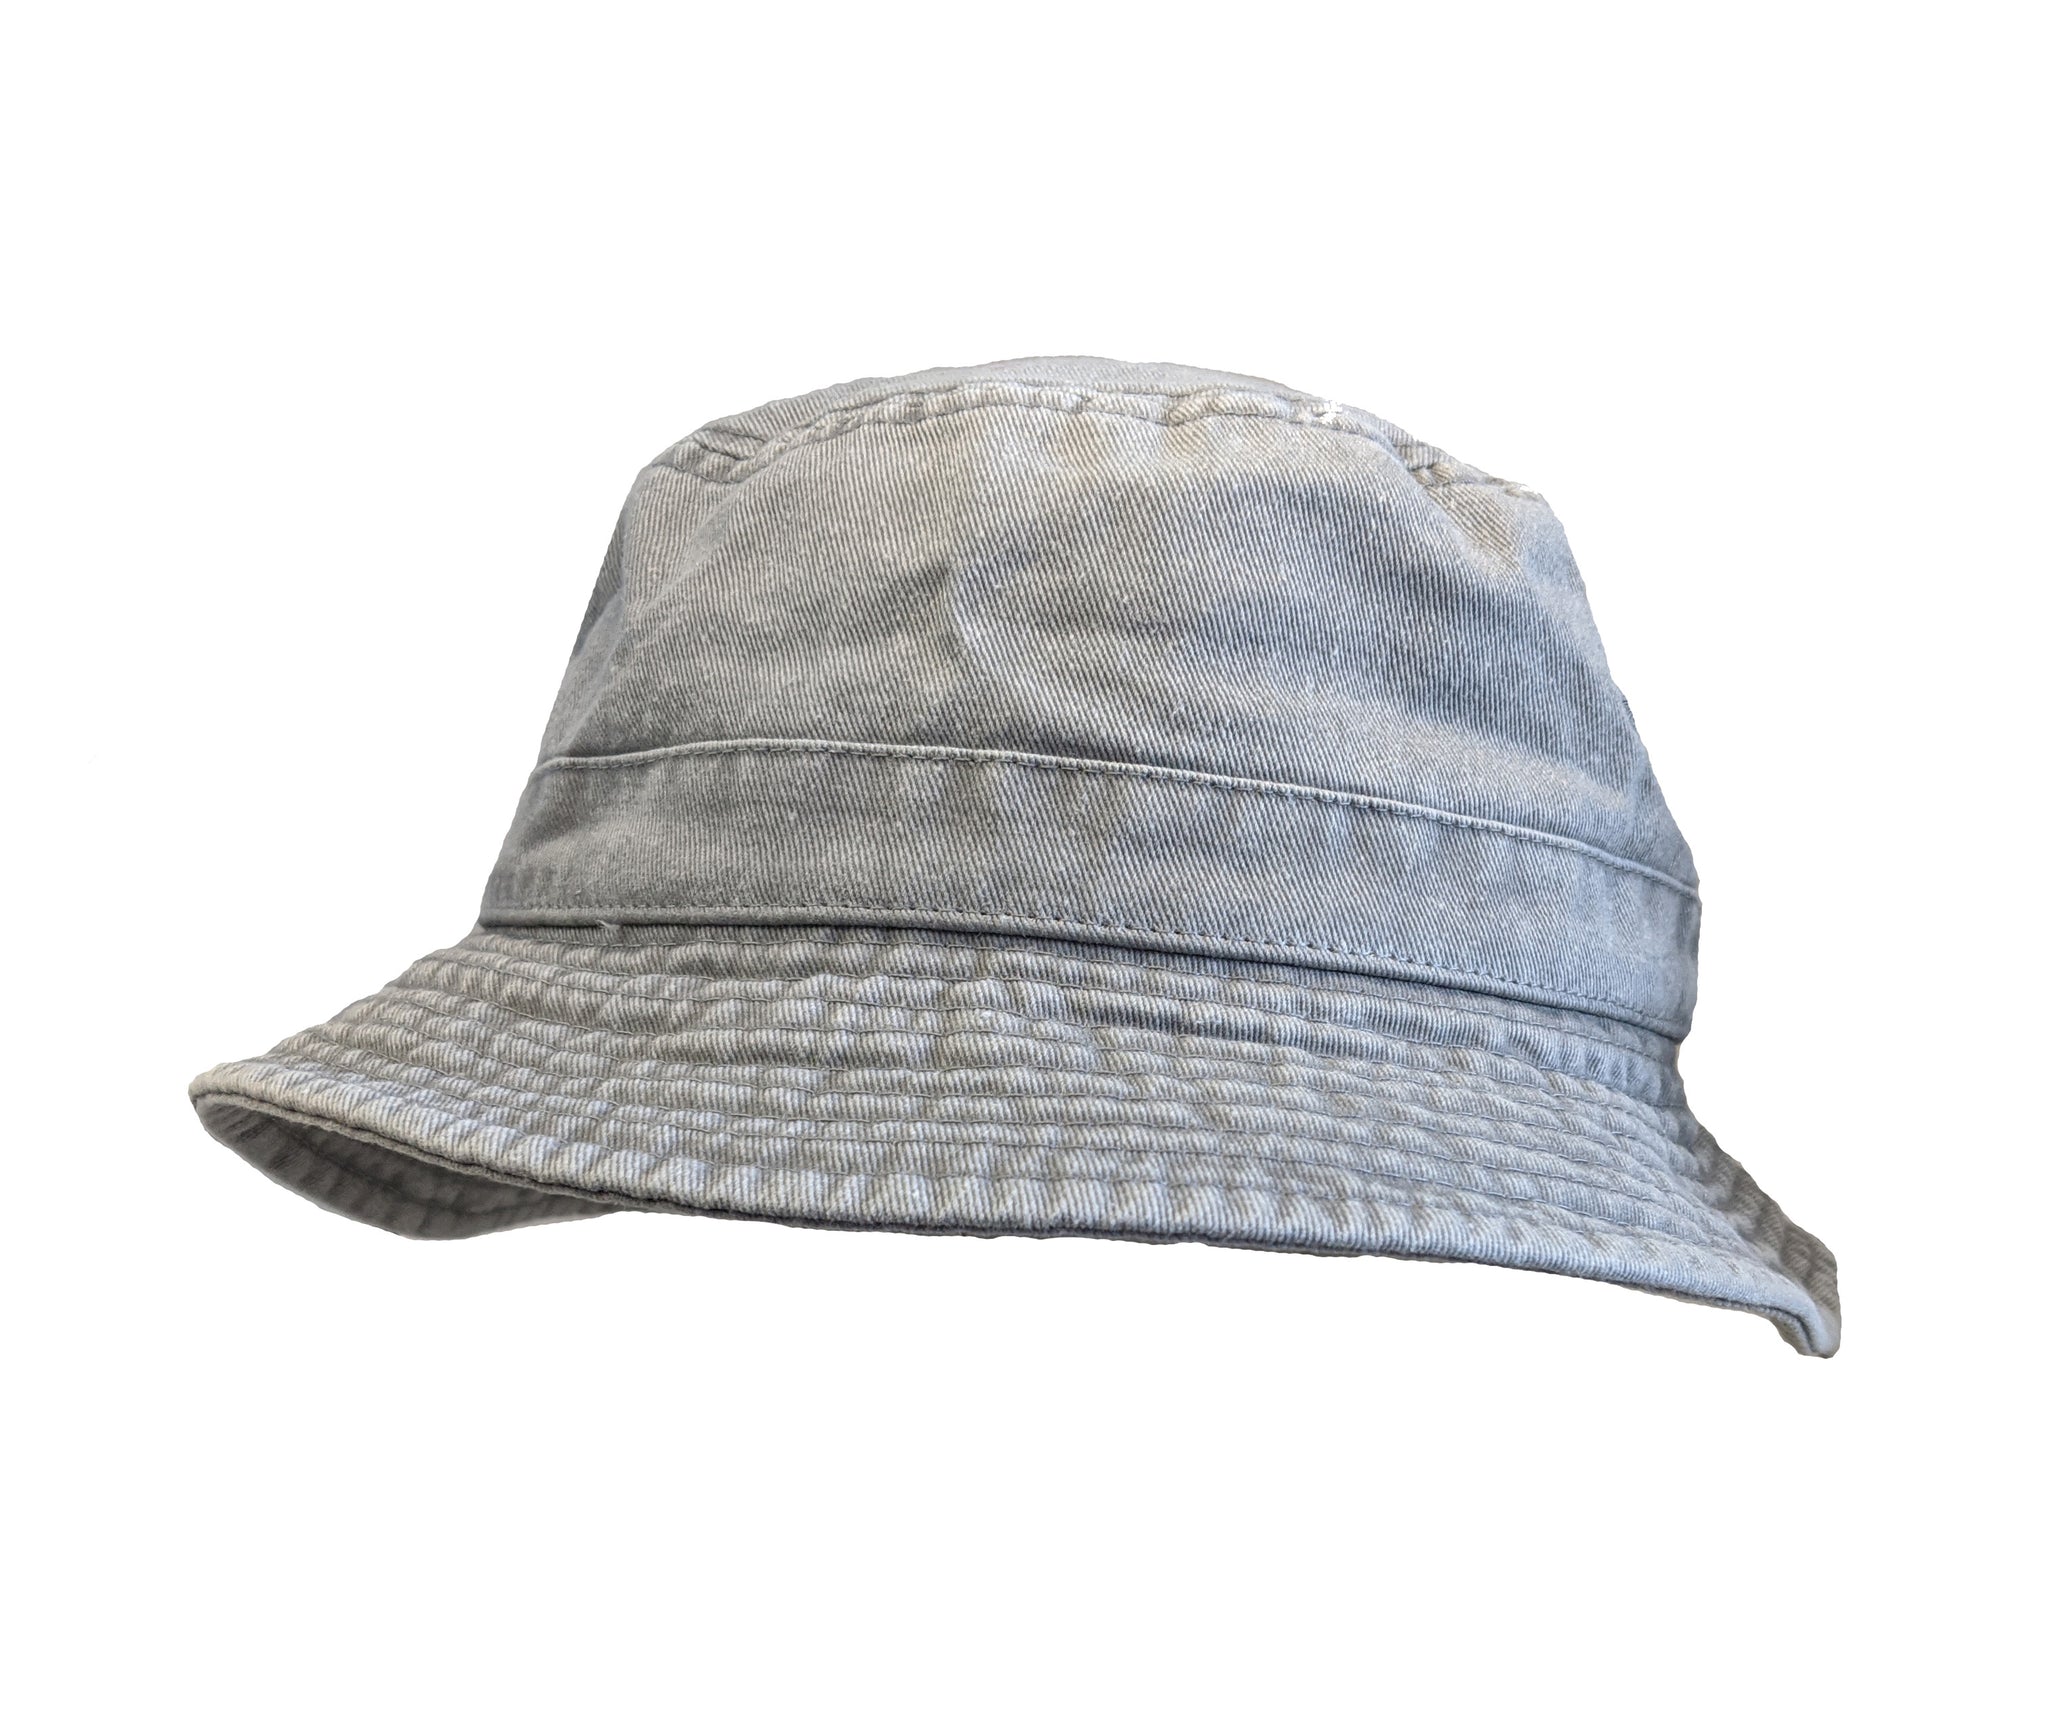 Etavirp Logo Stone Wash Buchet Hat Gray-